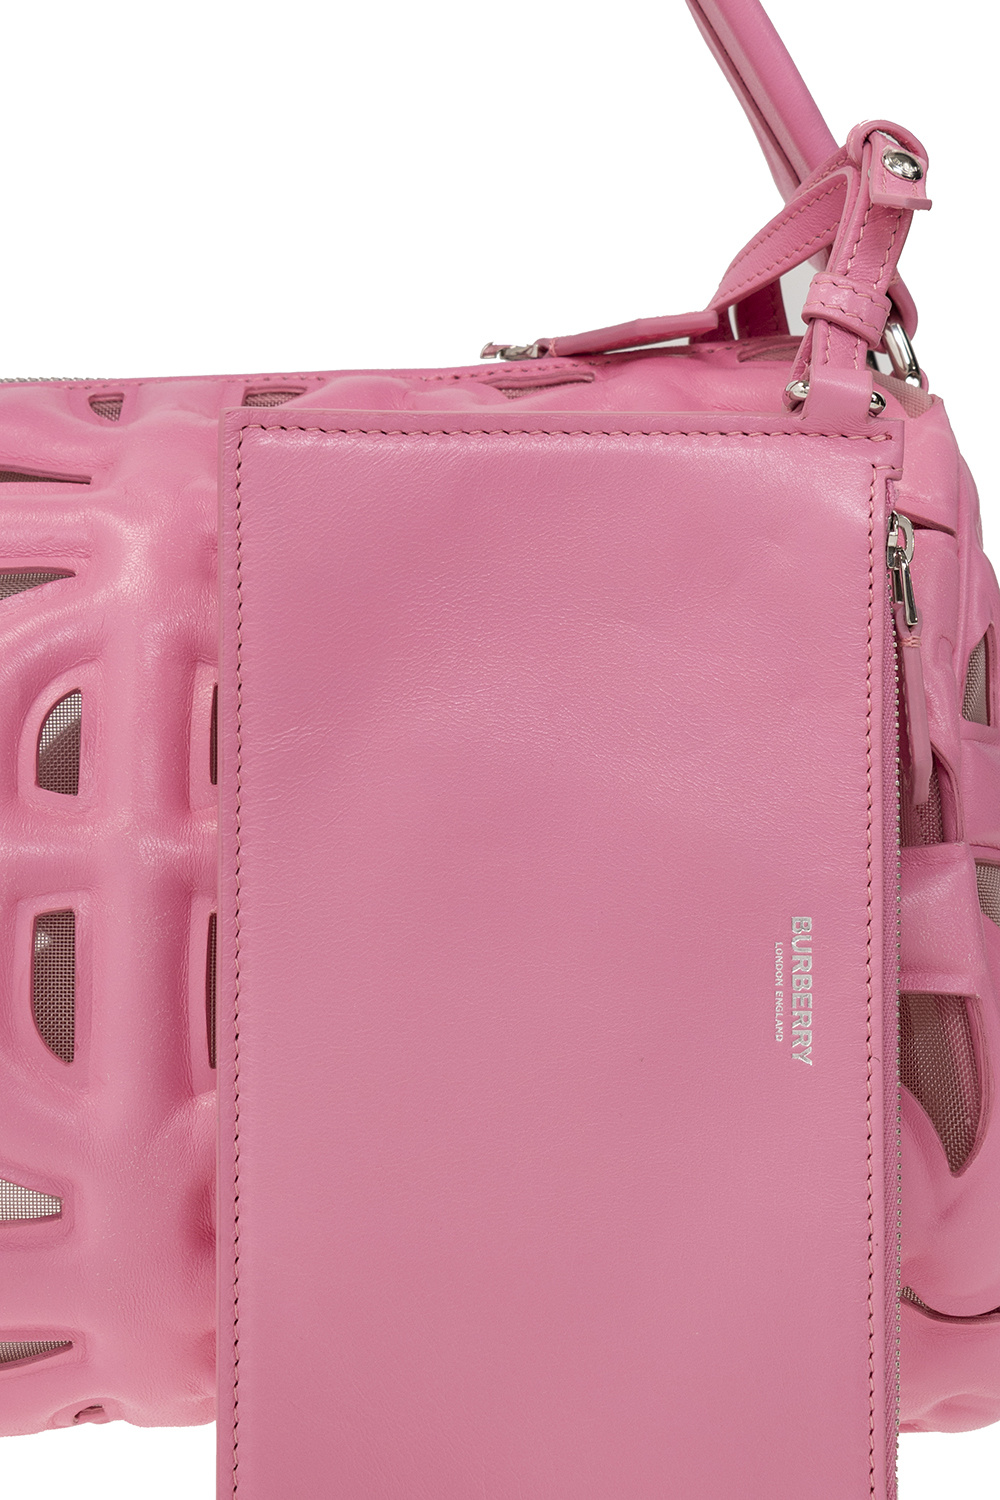 Burberry Women's 'rhombi' Shoulder Bag - Pink - Shoulder Bags